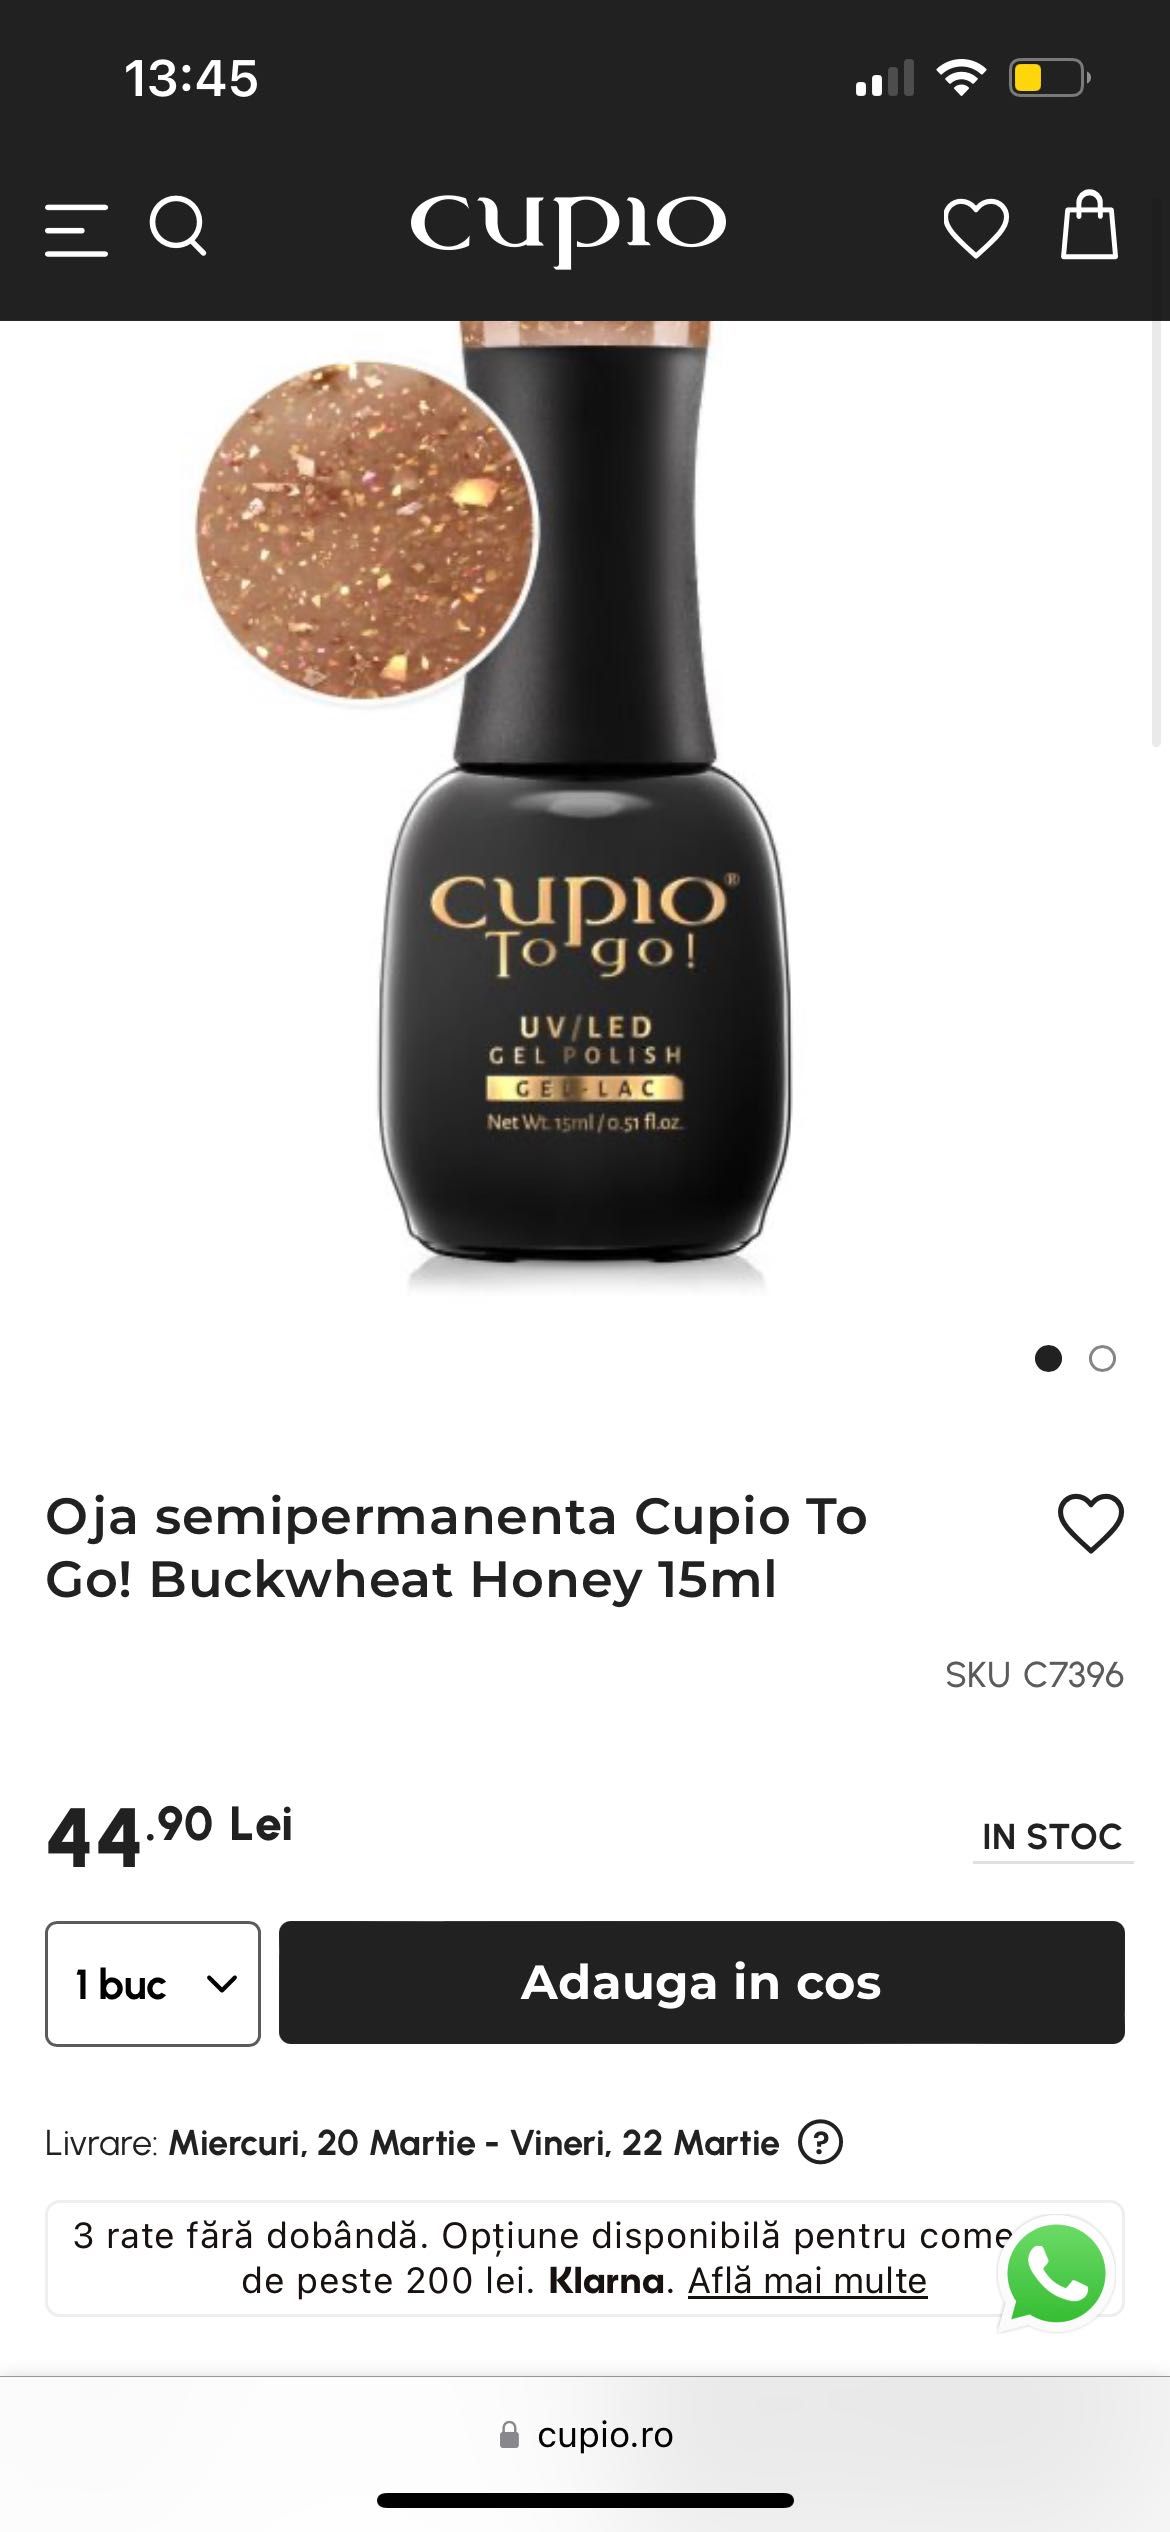 Oja semipermanenta Cupio nude cu particule aurii - Buckwheat Honey